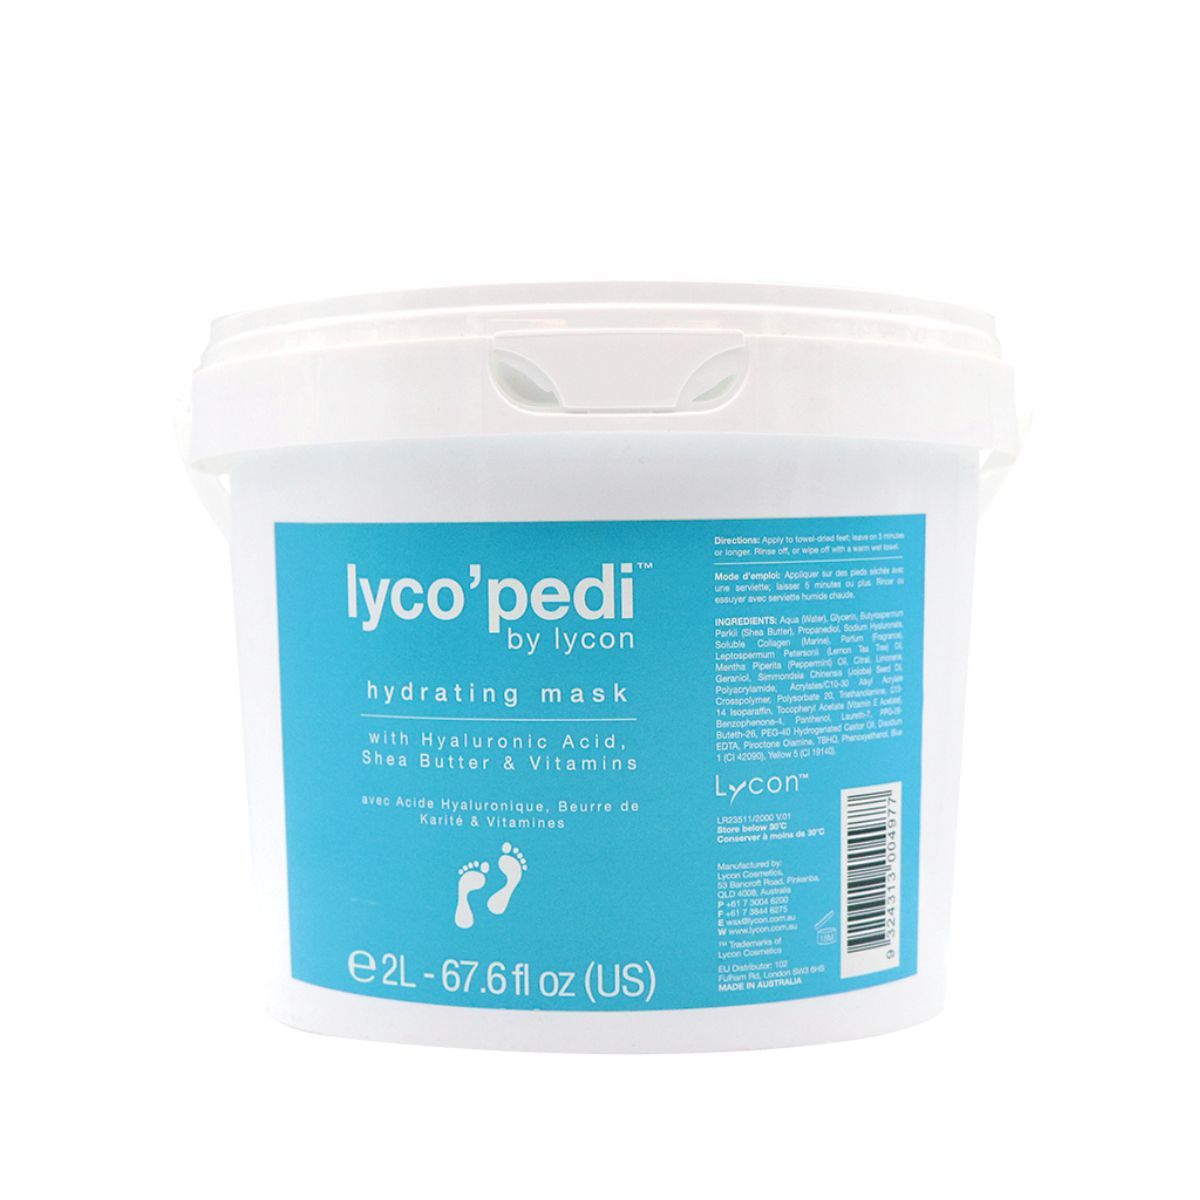 Lyco'Pedi Hydrating Mask 2L